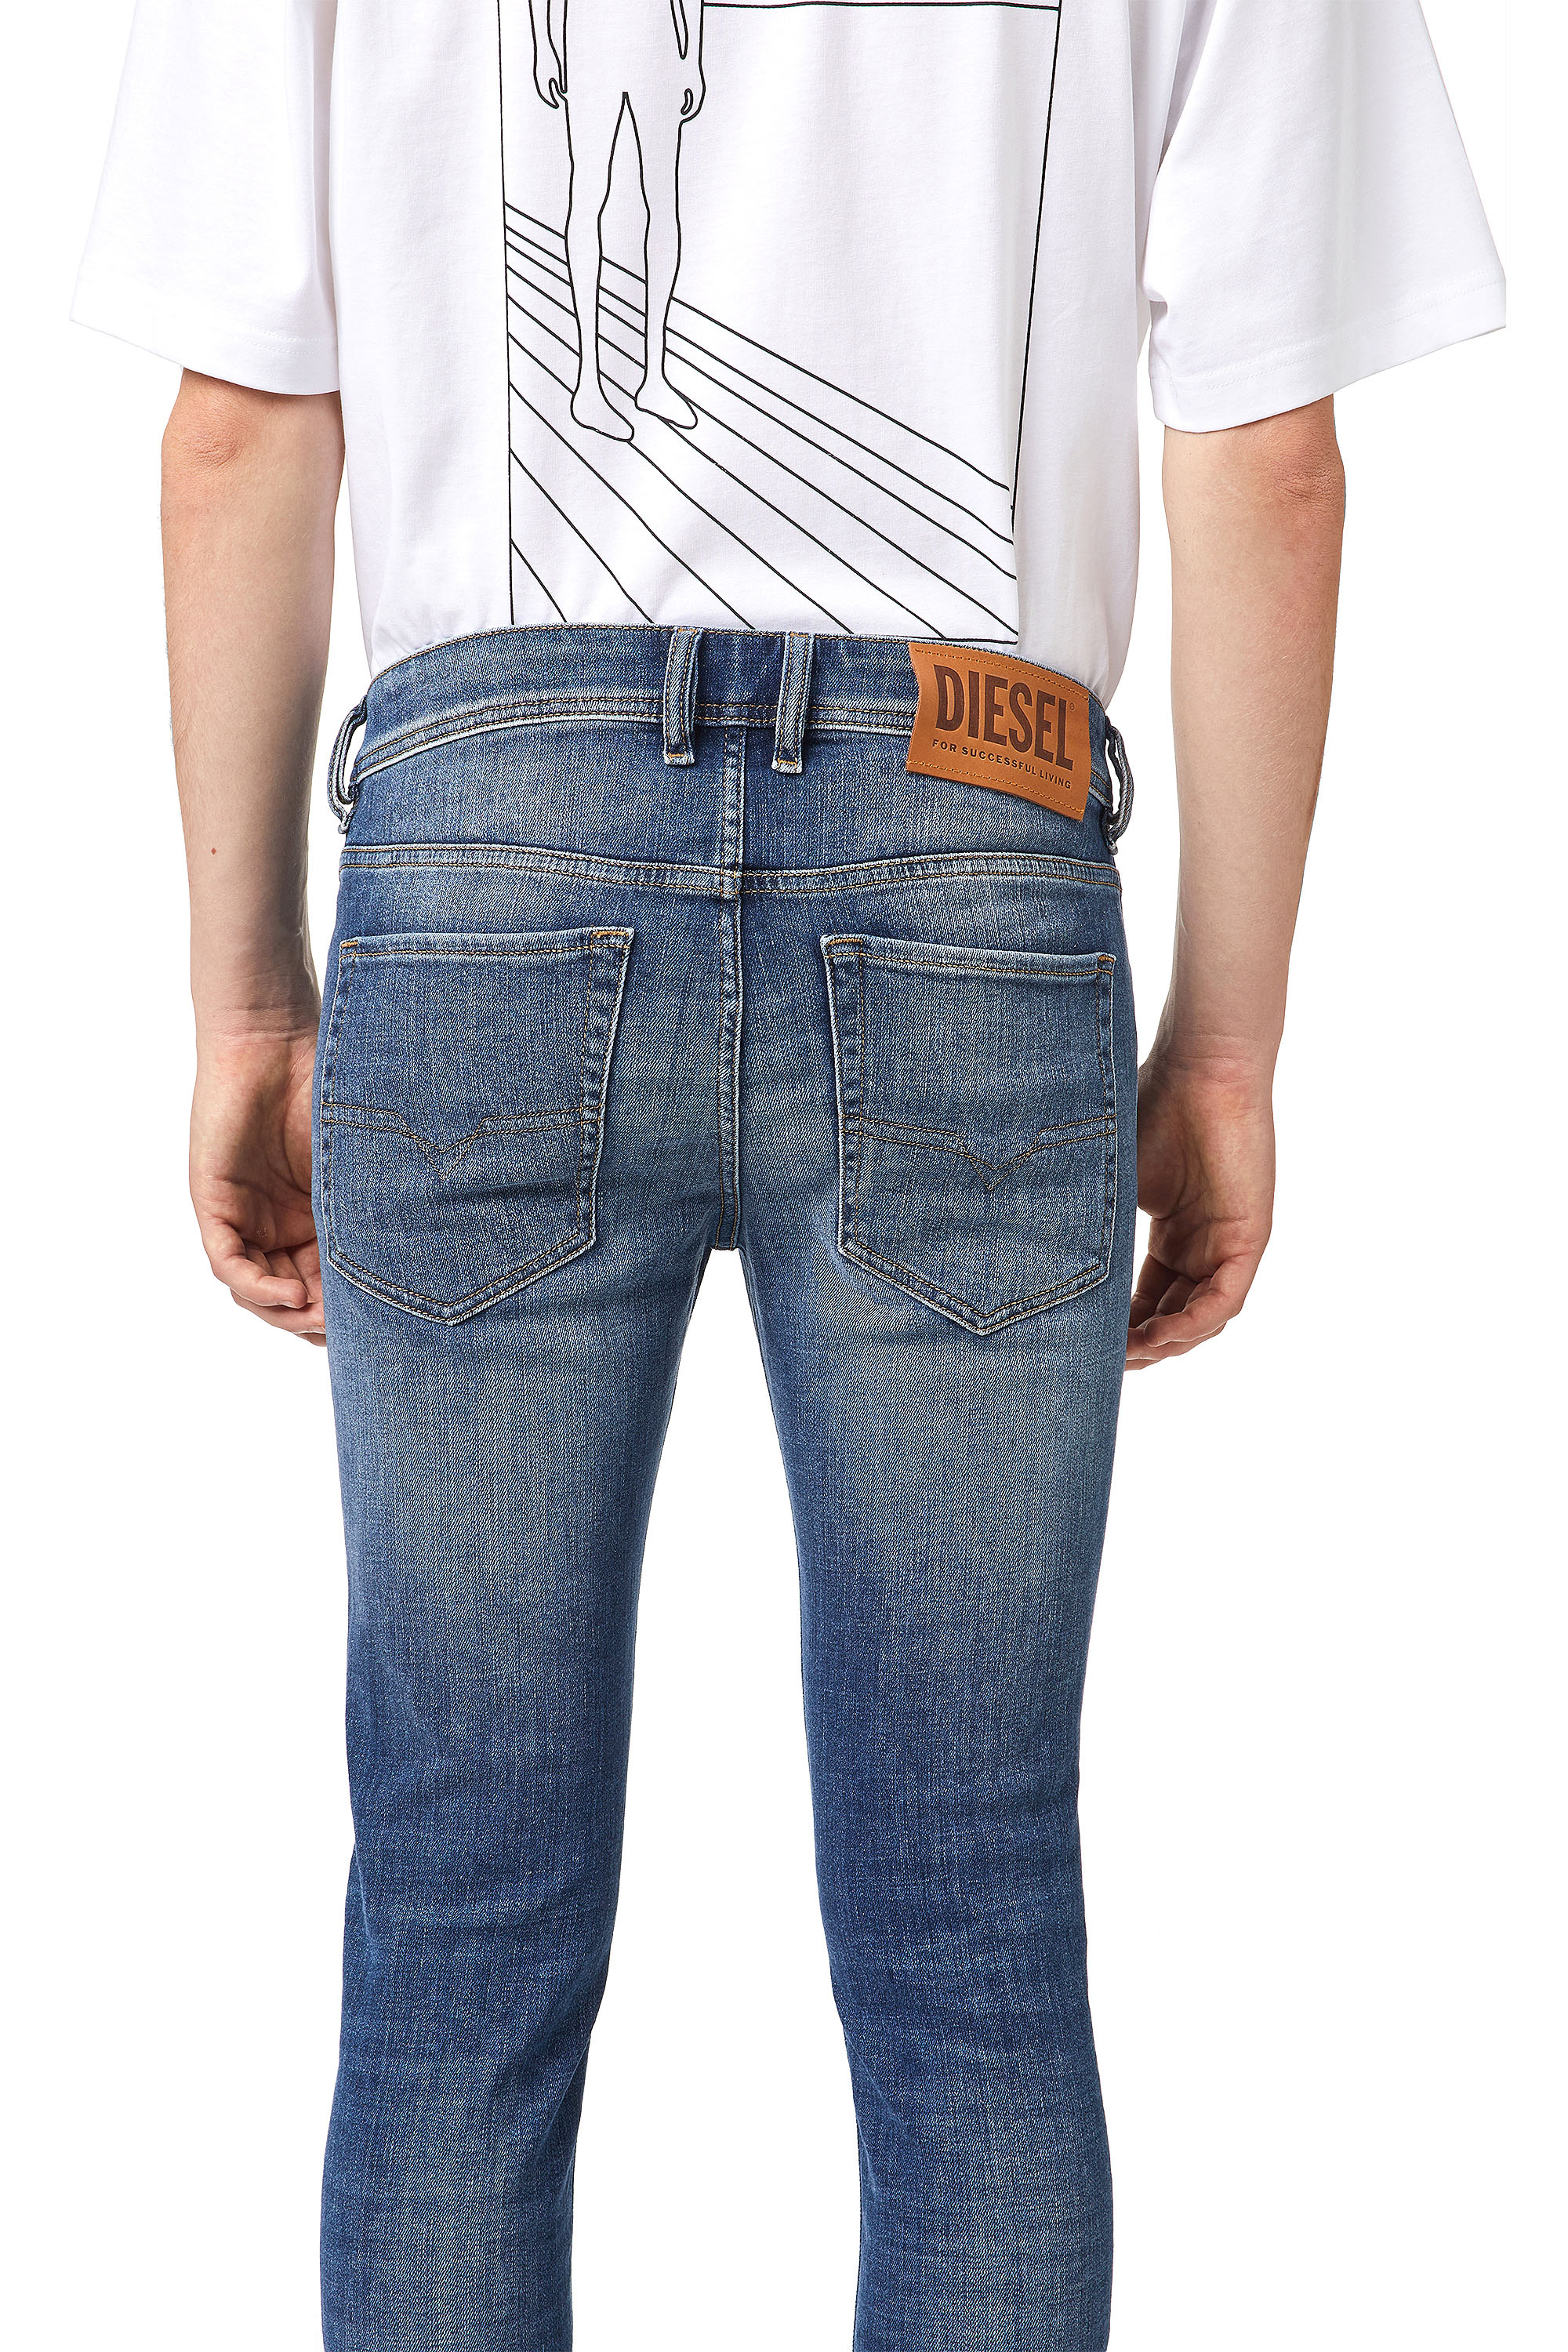 DIESEL Denim Sleenker-x 09a18 Jeans in Denim Grey for Men Mens Clothing Jeans Skinny jeans Blue 